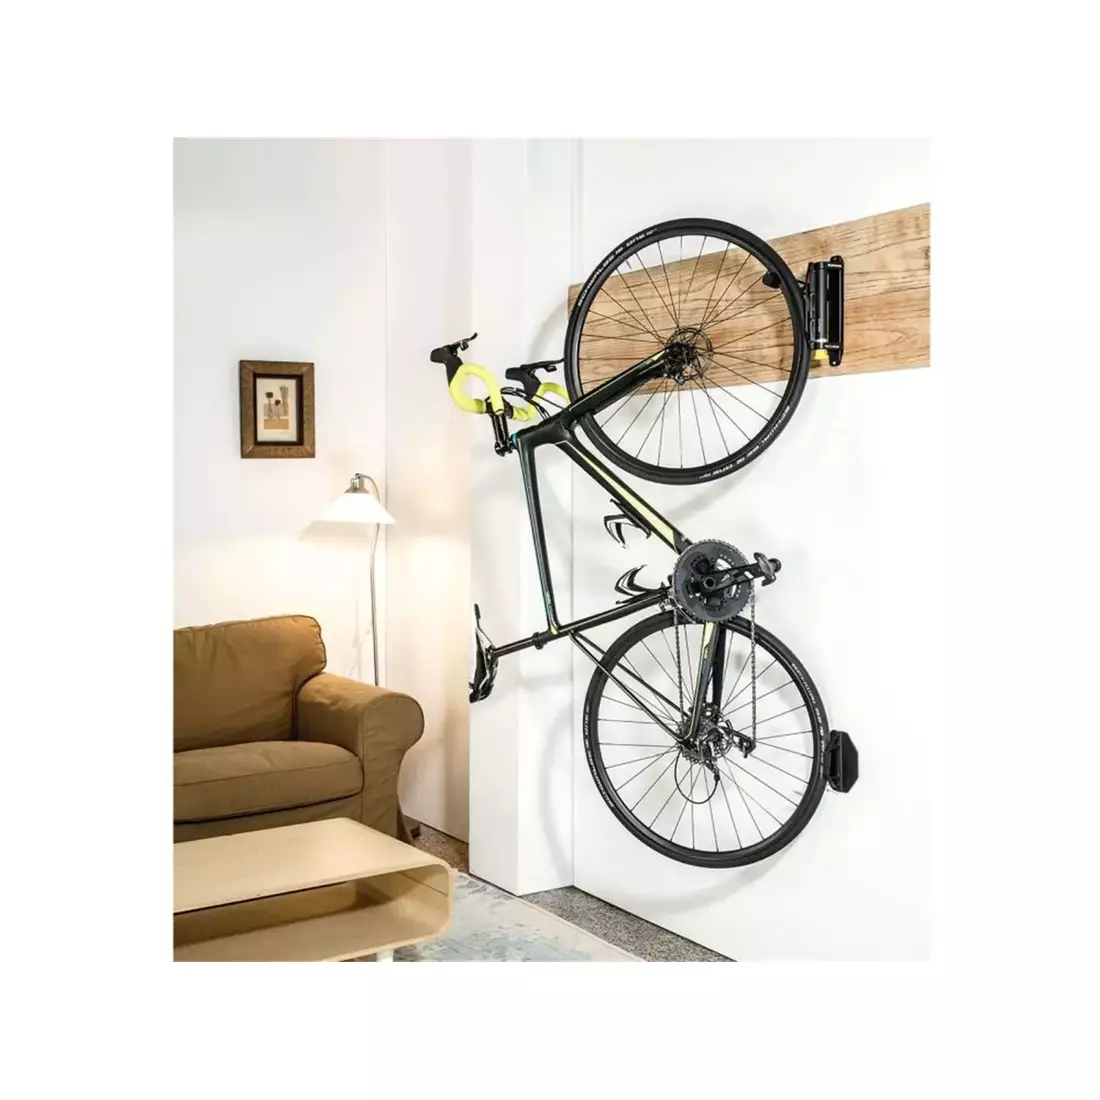 TOPEAK SWING-UP DX BIKE HOLDER bicycle wall rack, black